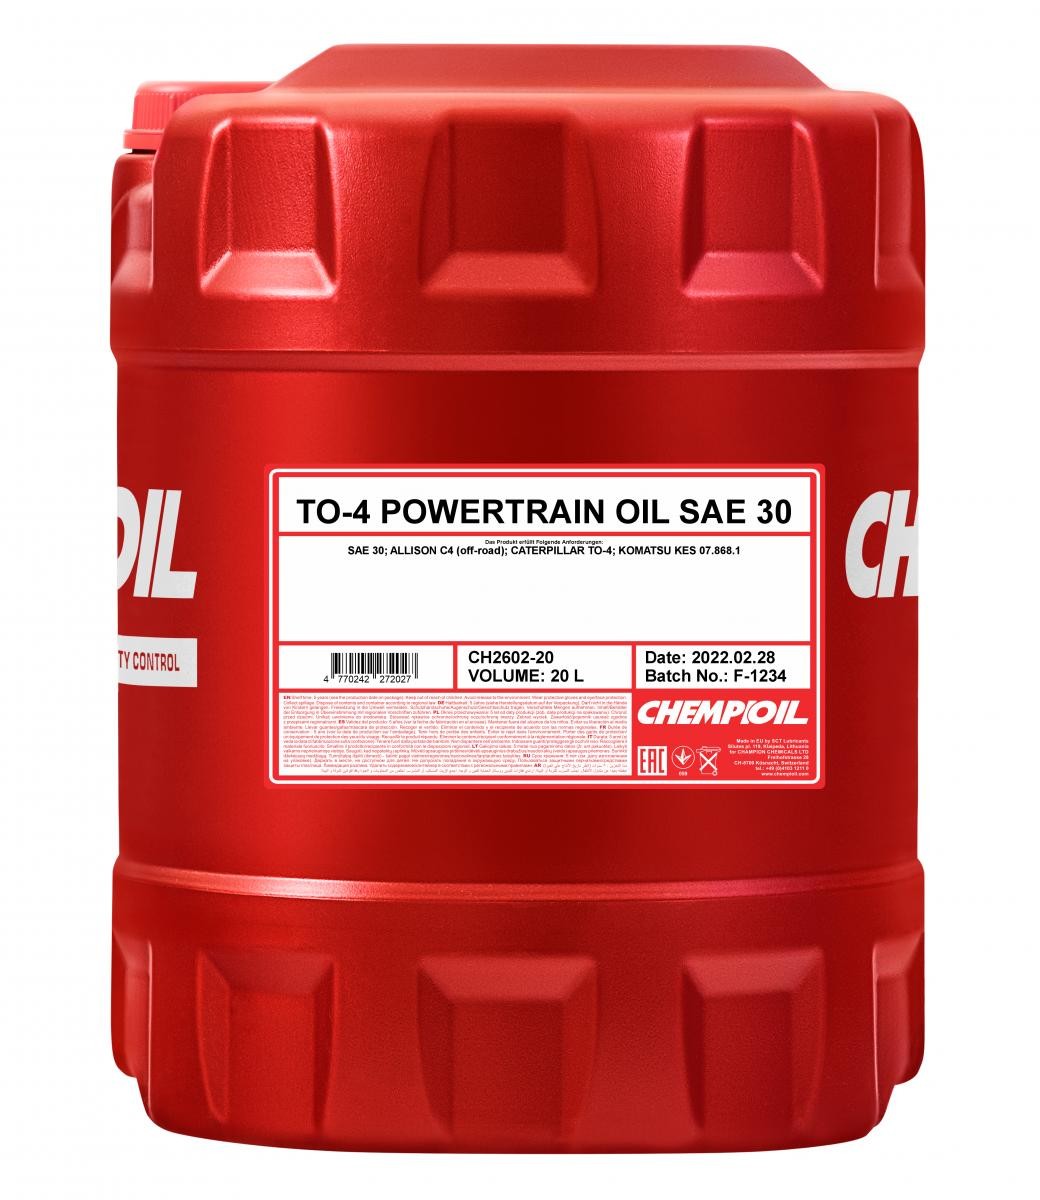 CHEMPIOIL POWERTRAIN OIL, TO-4 SAE 30, 20l Motor oil CH2602-20 buy